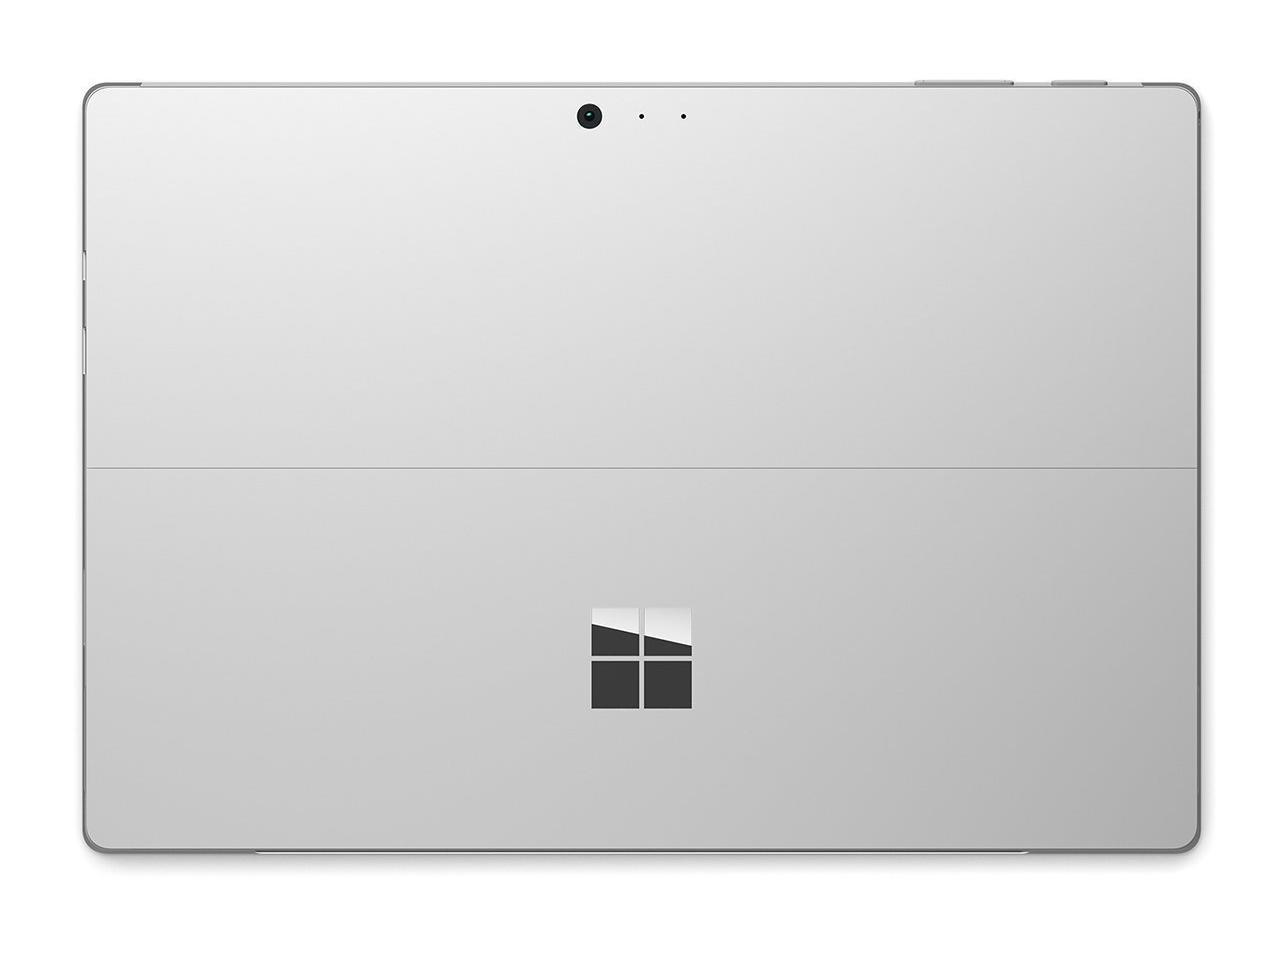 Microsoft Surface Pro 4 Intel Core i5 6th Gen 6300U (2.40GHz) 8GB Memory  256 GB SSD Intel HD Graphics 520 12.3